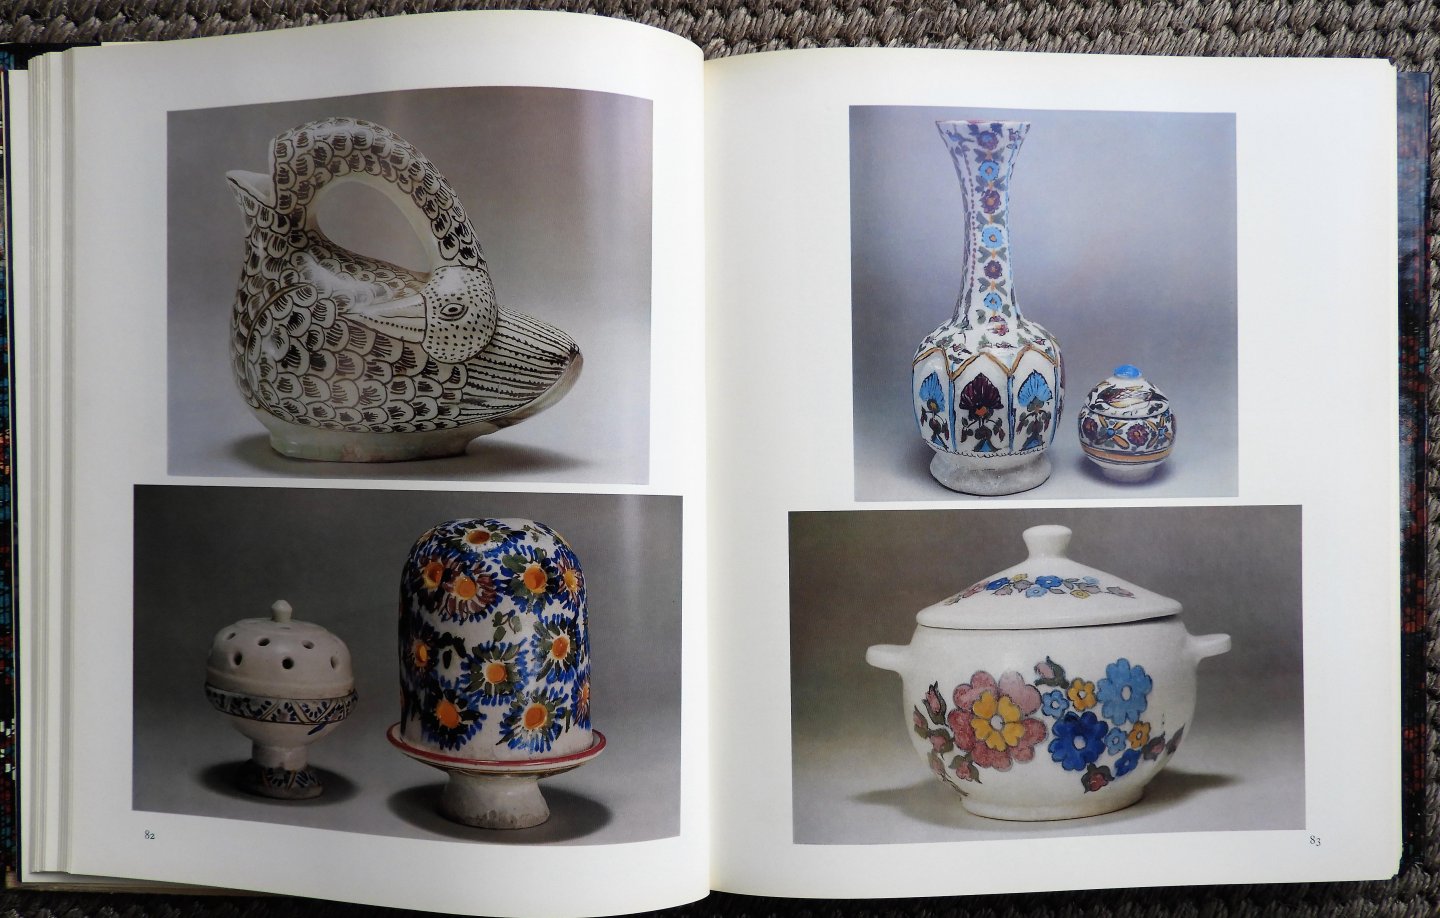 Gluck, Jay & Sumi - A survey of Persian Handicraft